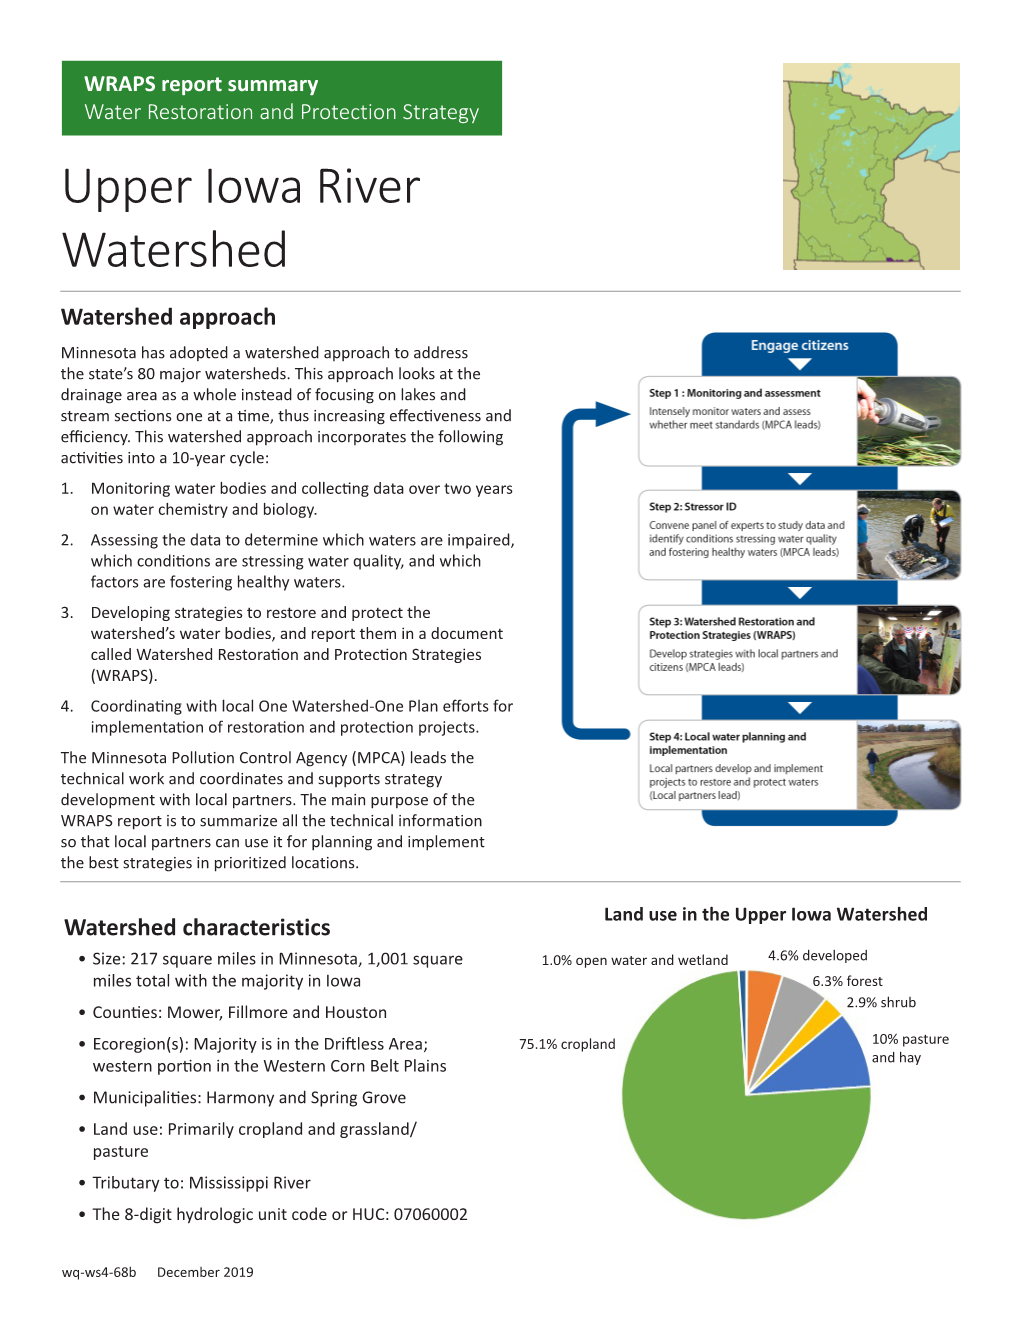 Summary of the Upper Iowa River WRAPS